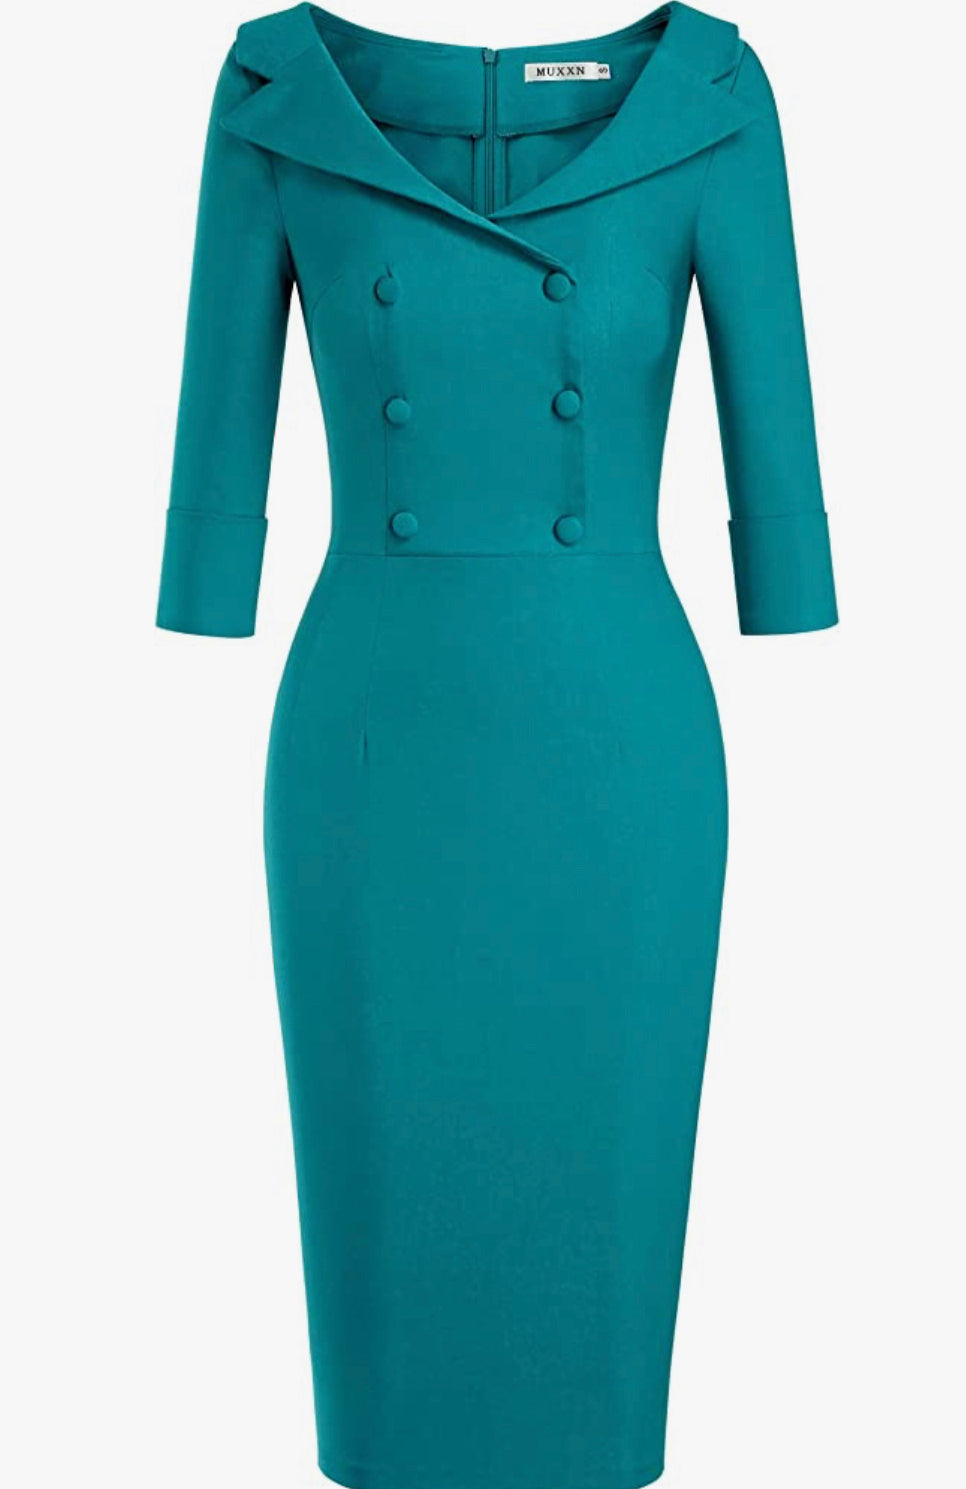 Vintage Inspired Sweetheart Neckline Dress, Sizes Small - 2XLarge (US 4 - 18)